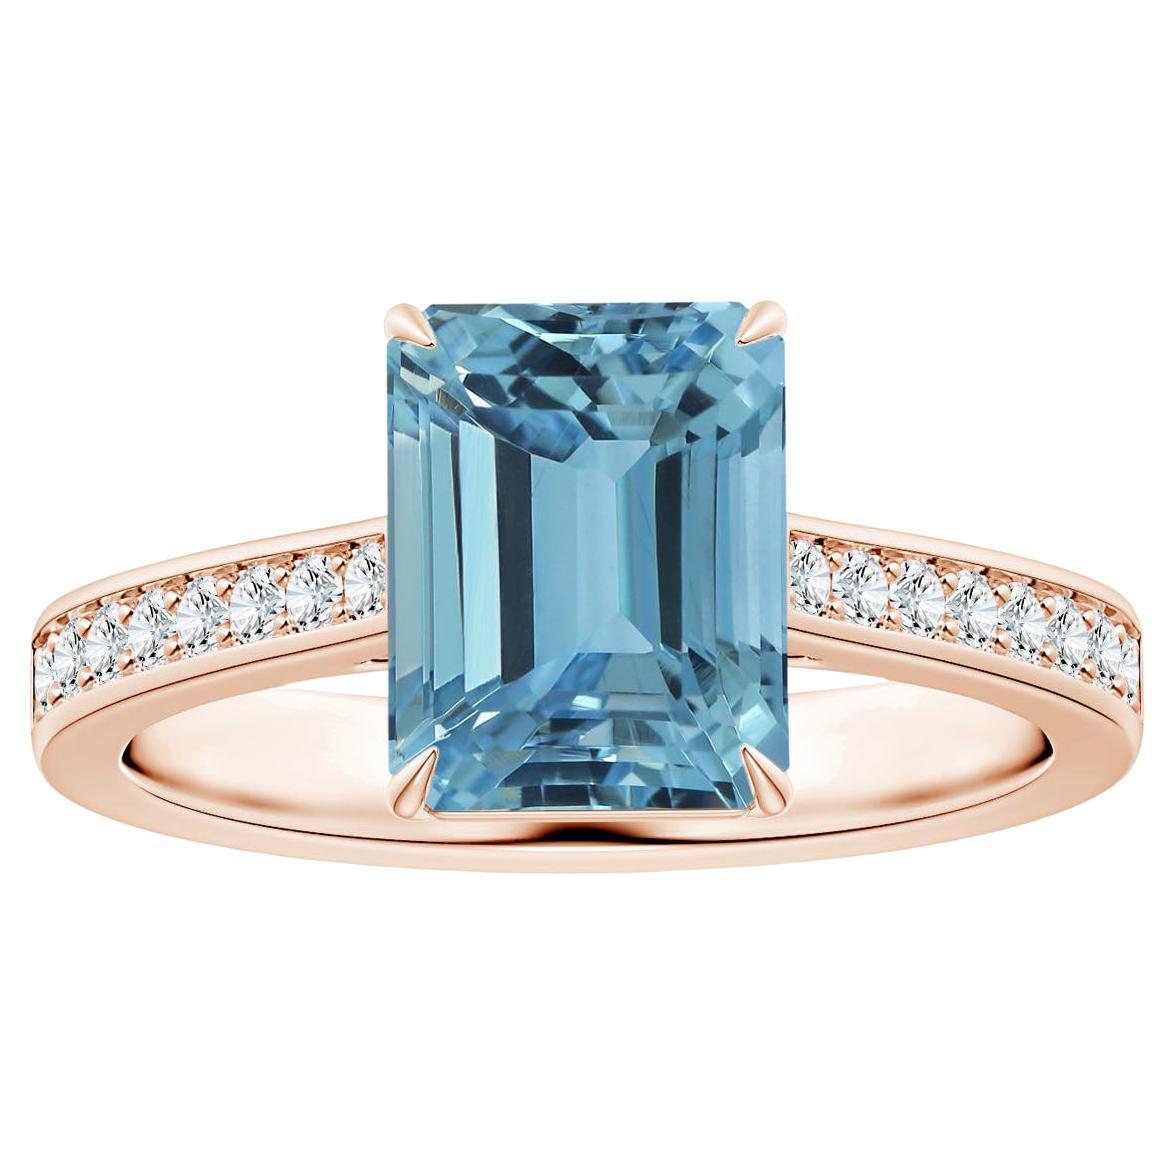 Angara Gia Certified Emerald-Cut Aquamarine Ring in Rose Gold with Diamond Shank